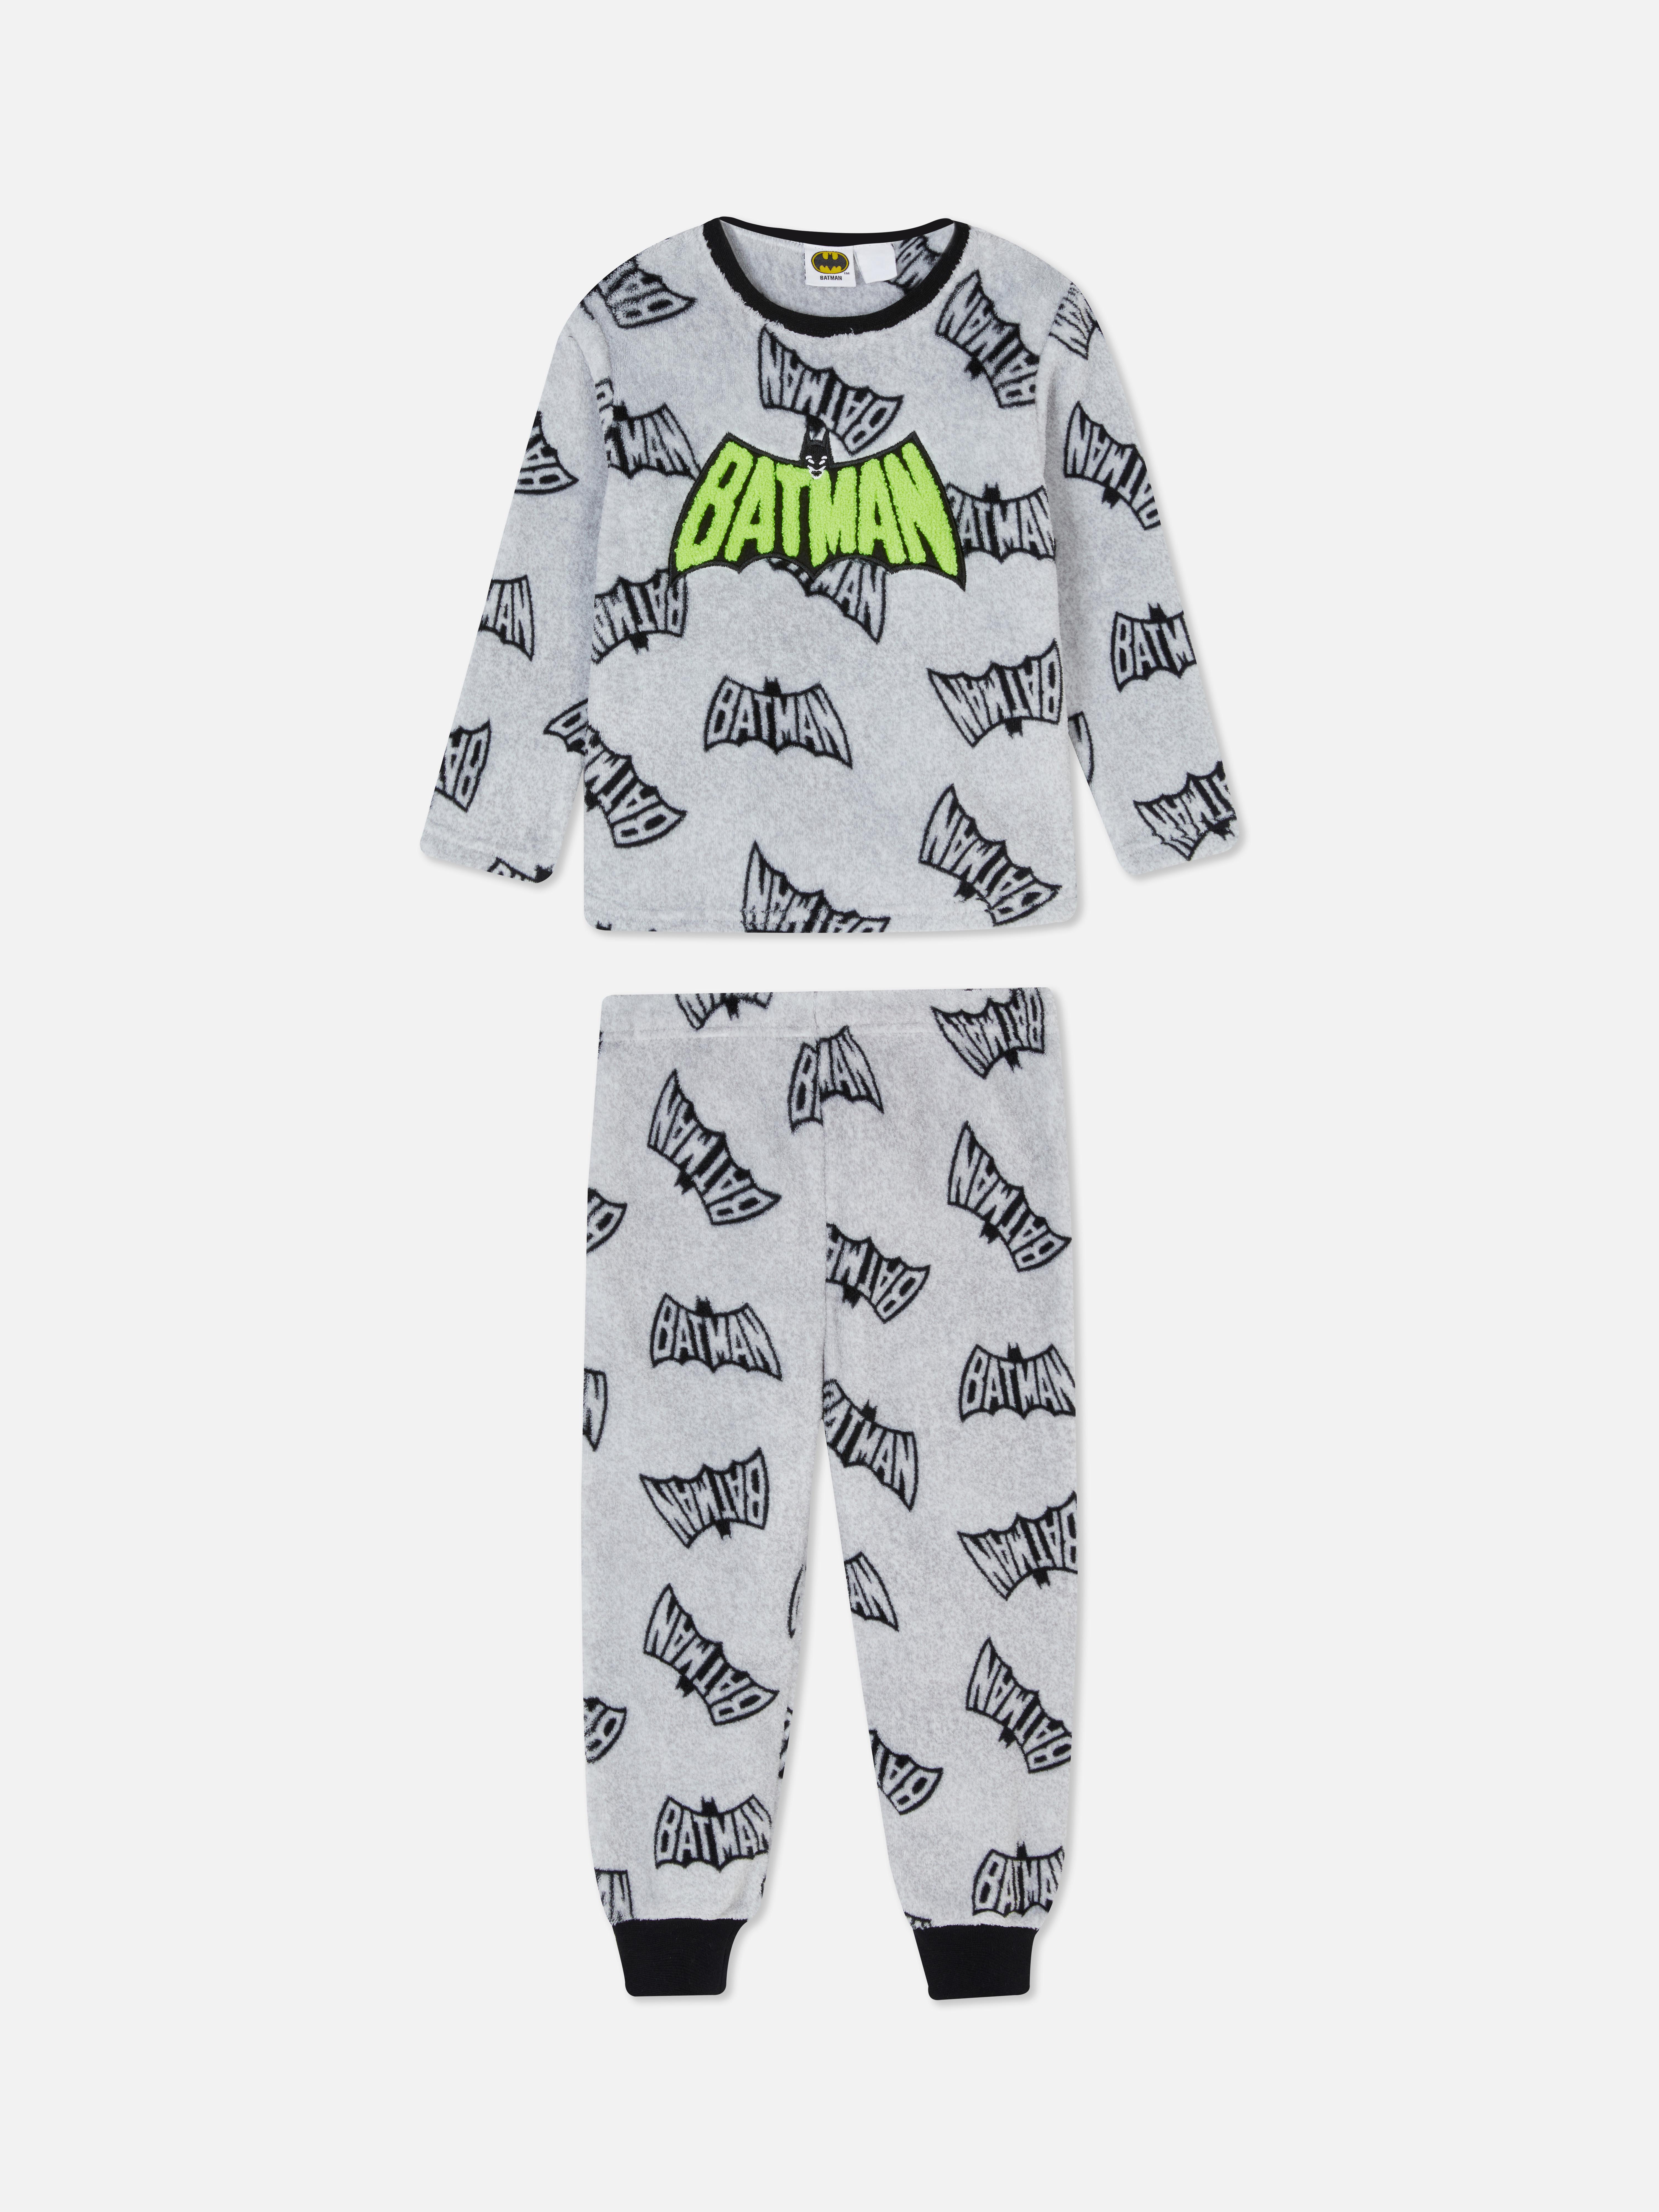 Pijama en tejido polar de Batman | para niños Moda para niños | Ropa para niños | Todos los Primark | España